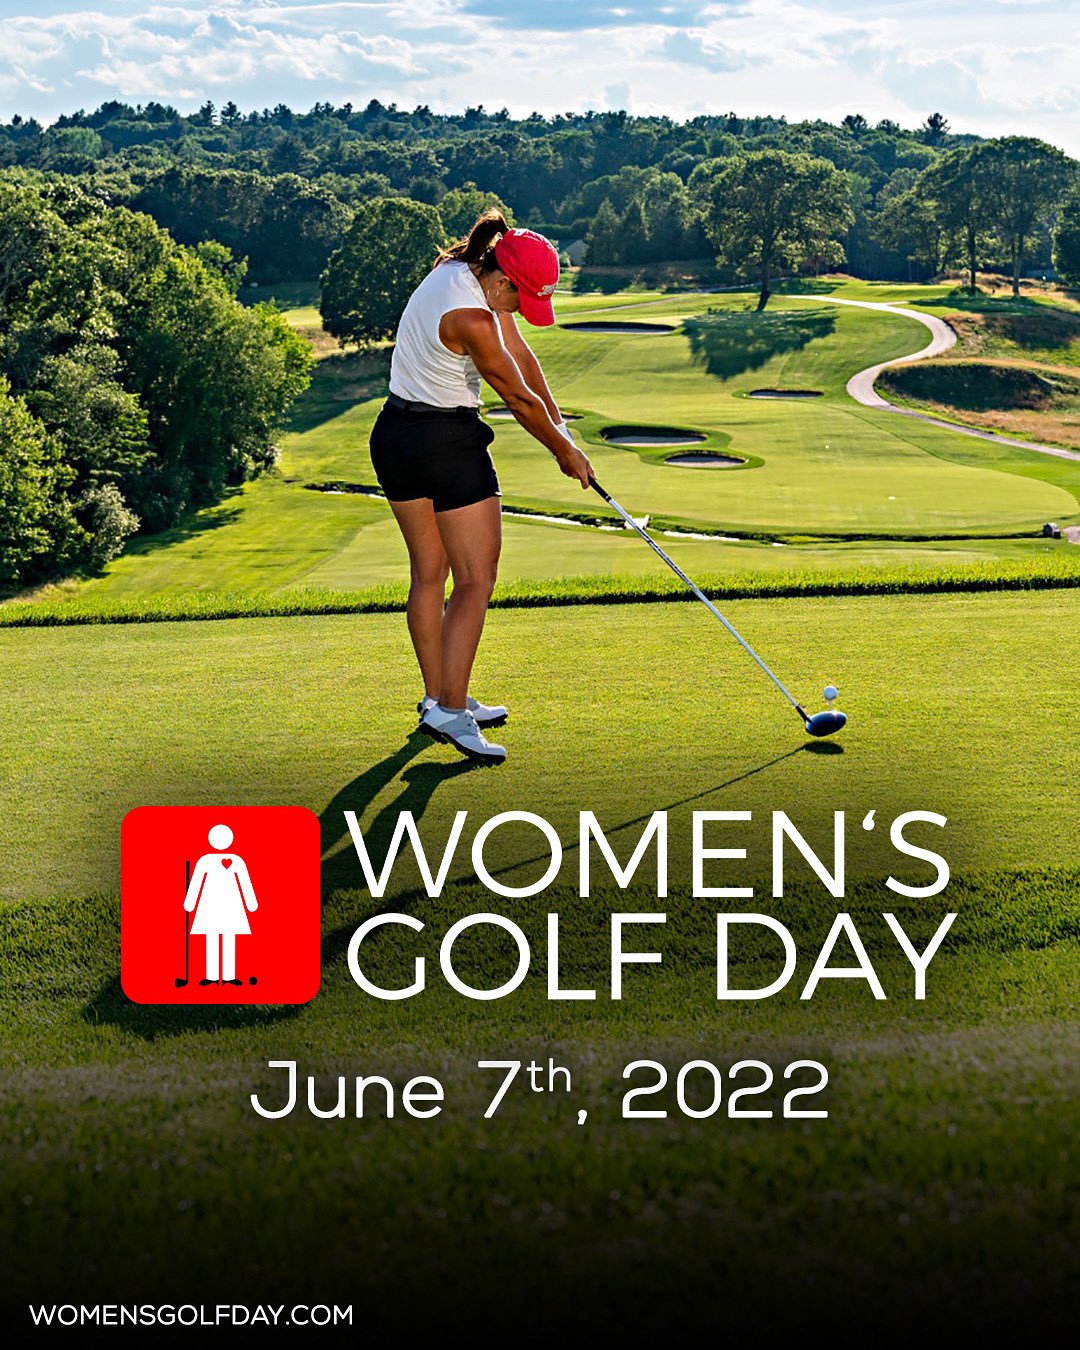 It's Women's Golf Day! Golf Content Network